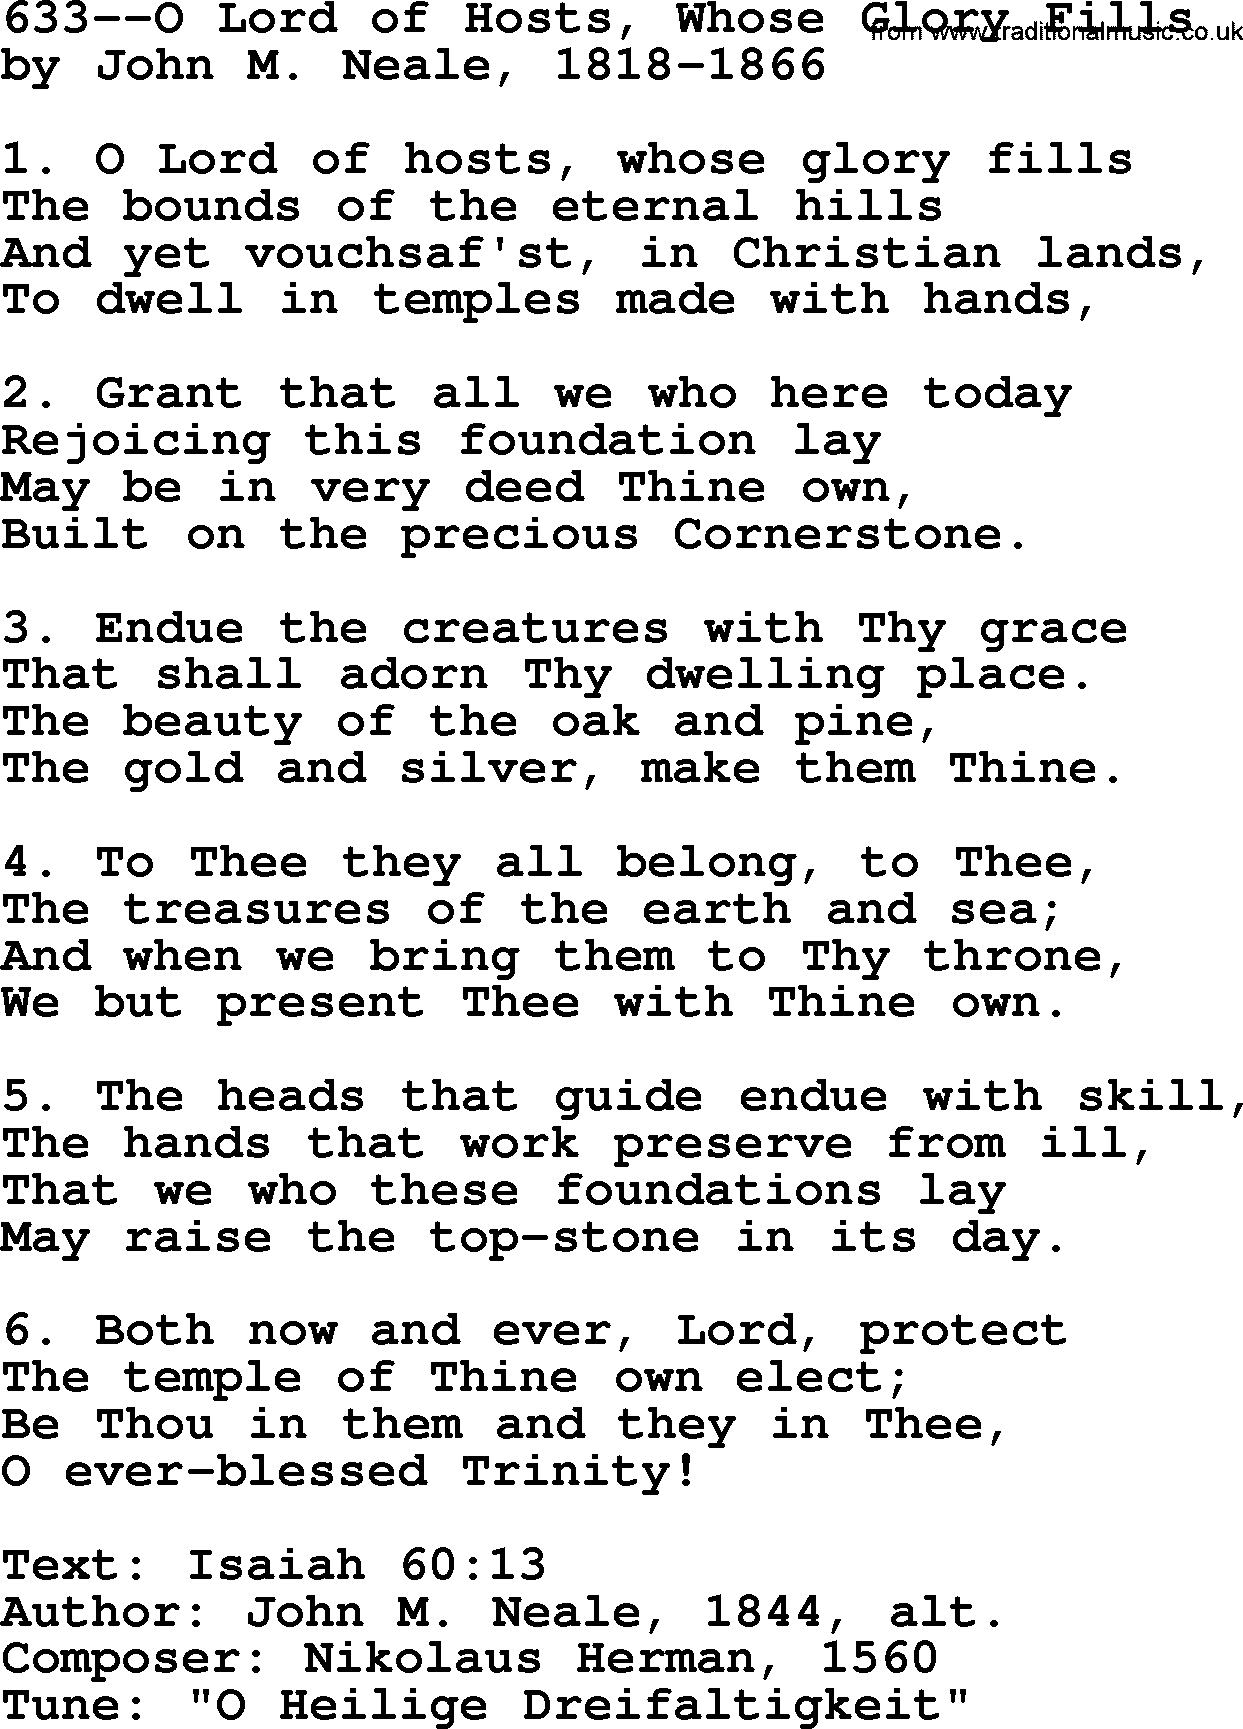 Lutheran Hymn: 633--O Lord of Hosts, Whose Glory Fills.txt lyrics with PDF